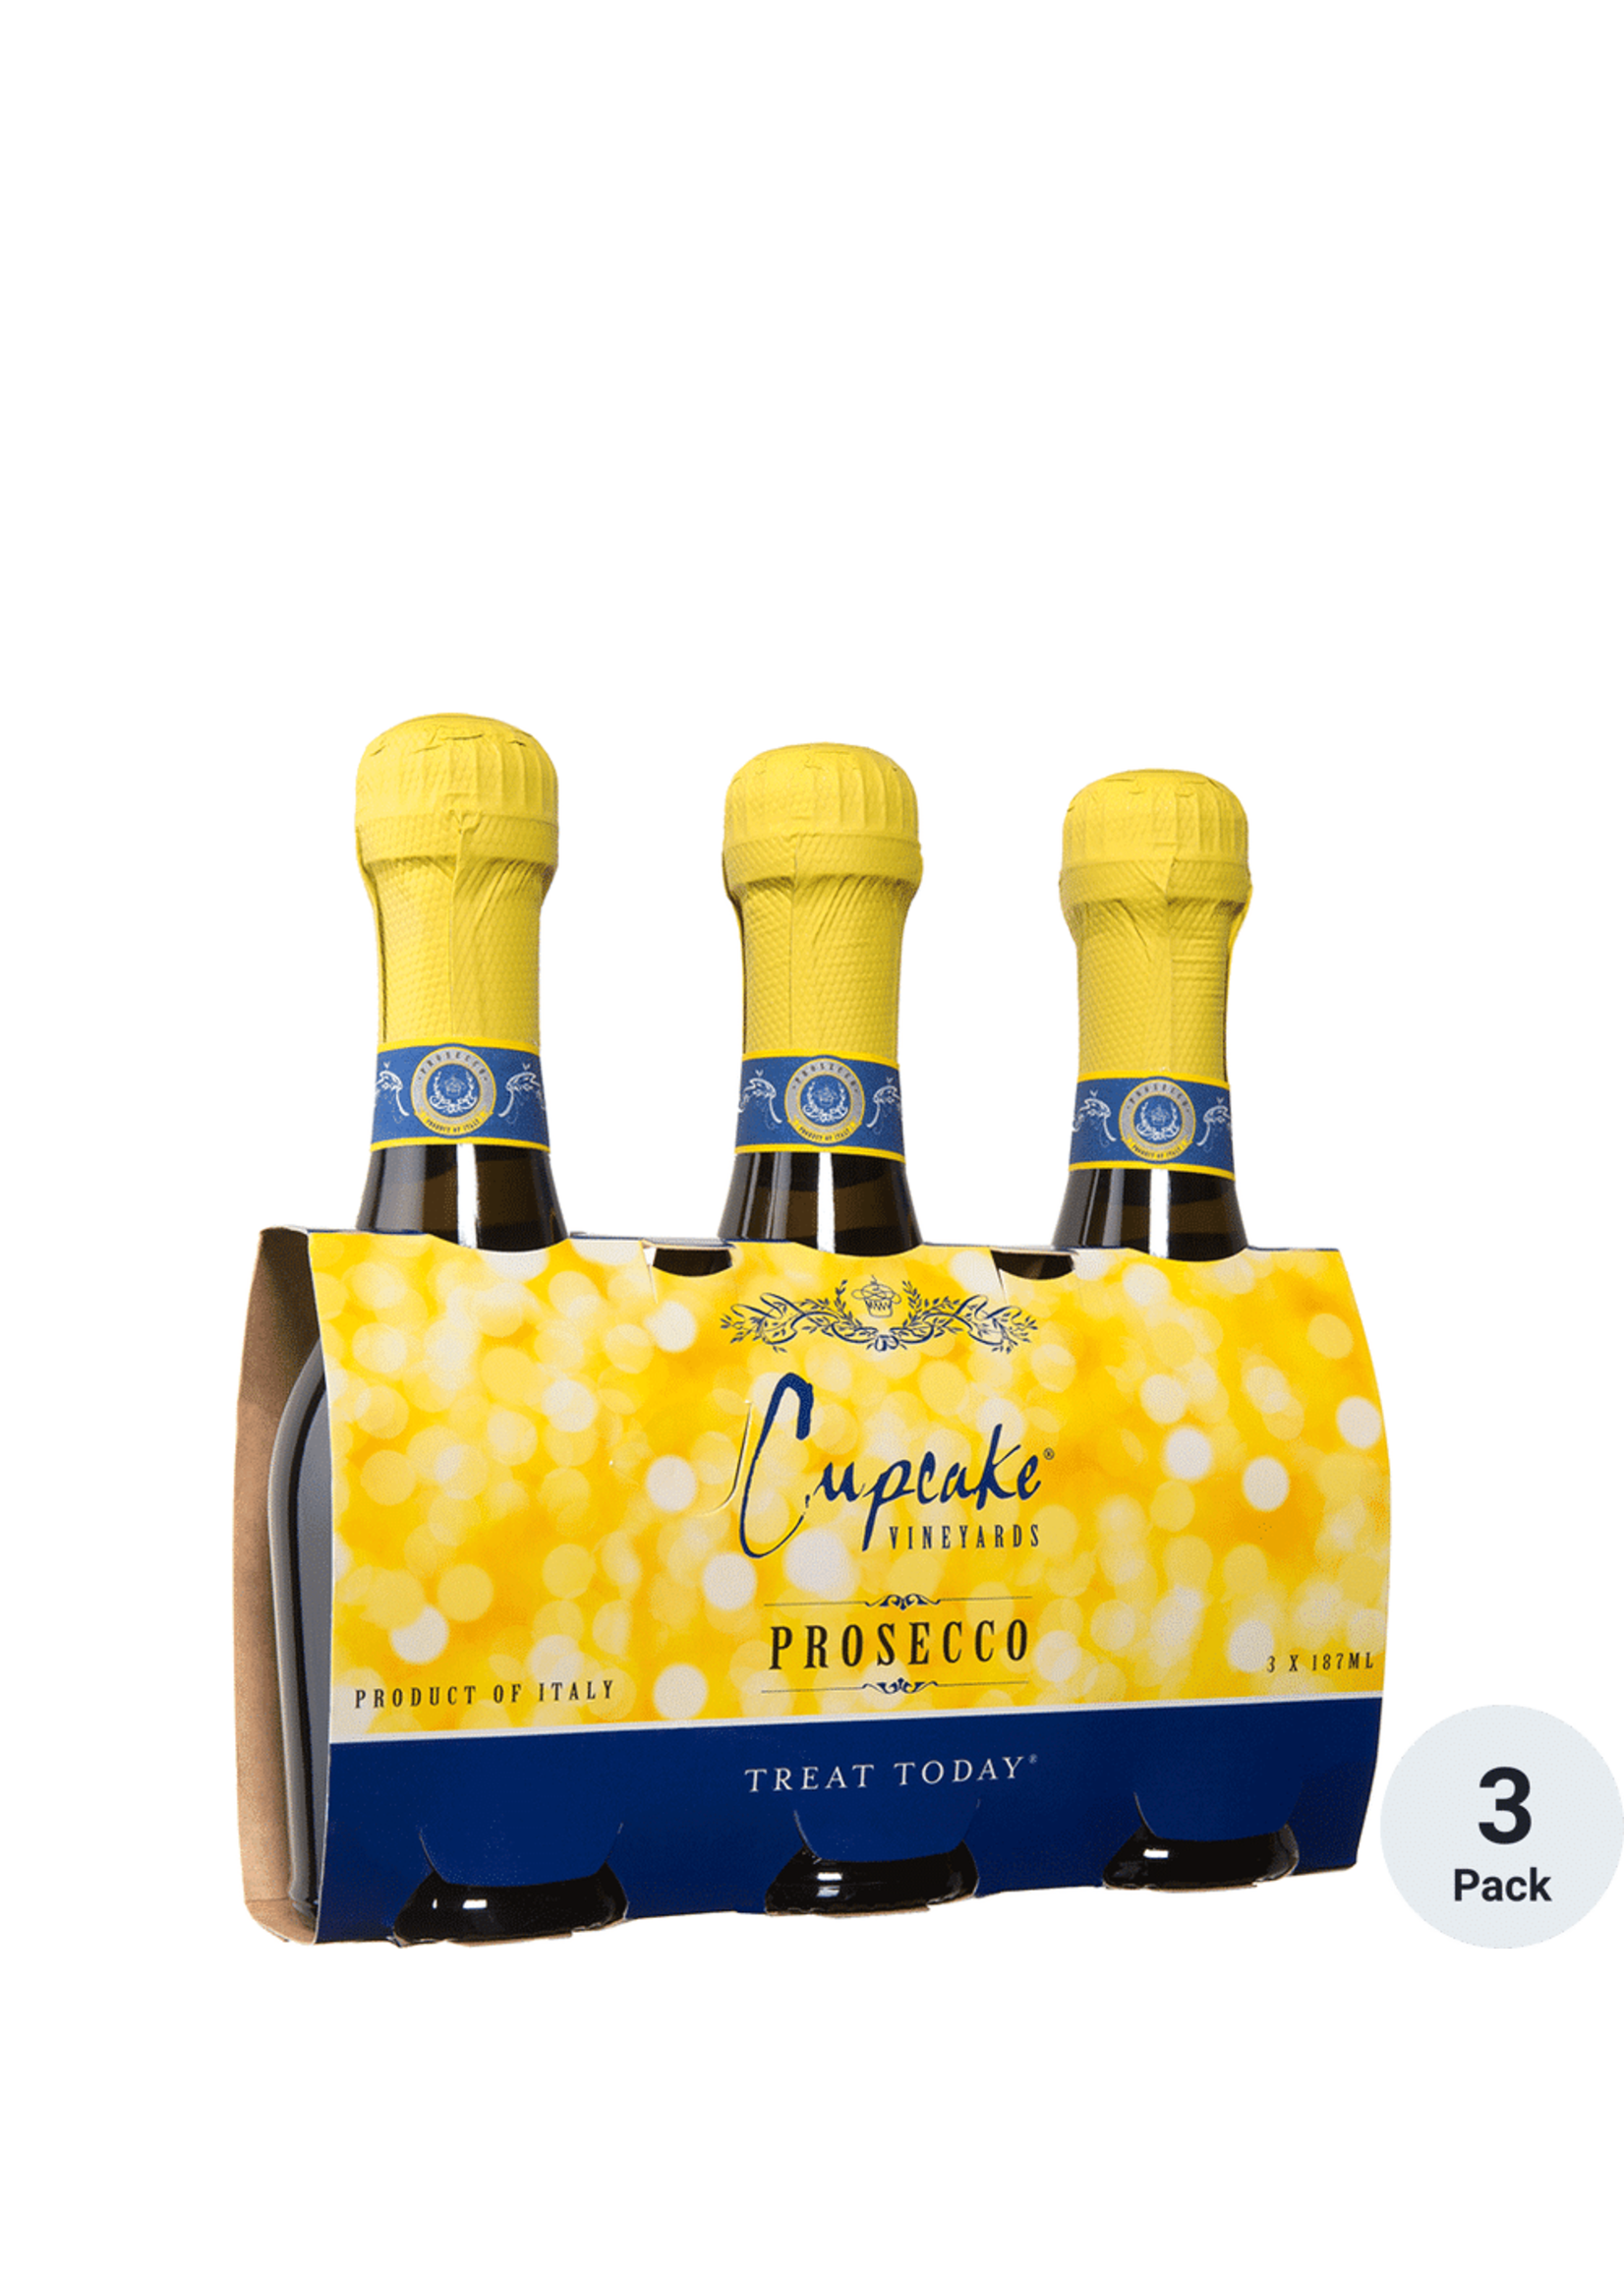 Cupcake Prosecco 3pk 187ml Bottles